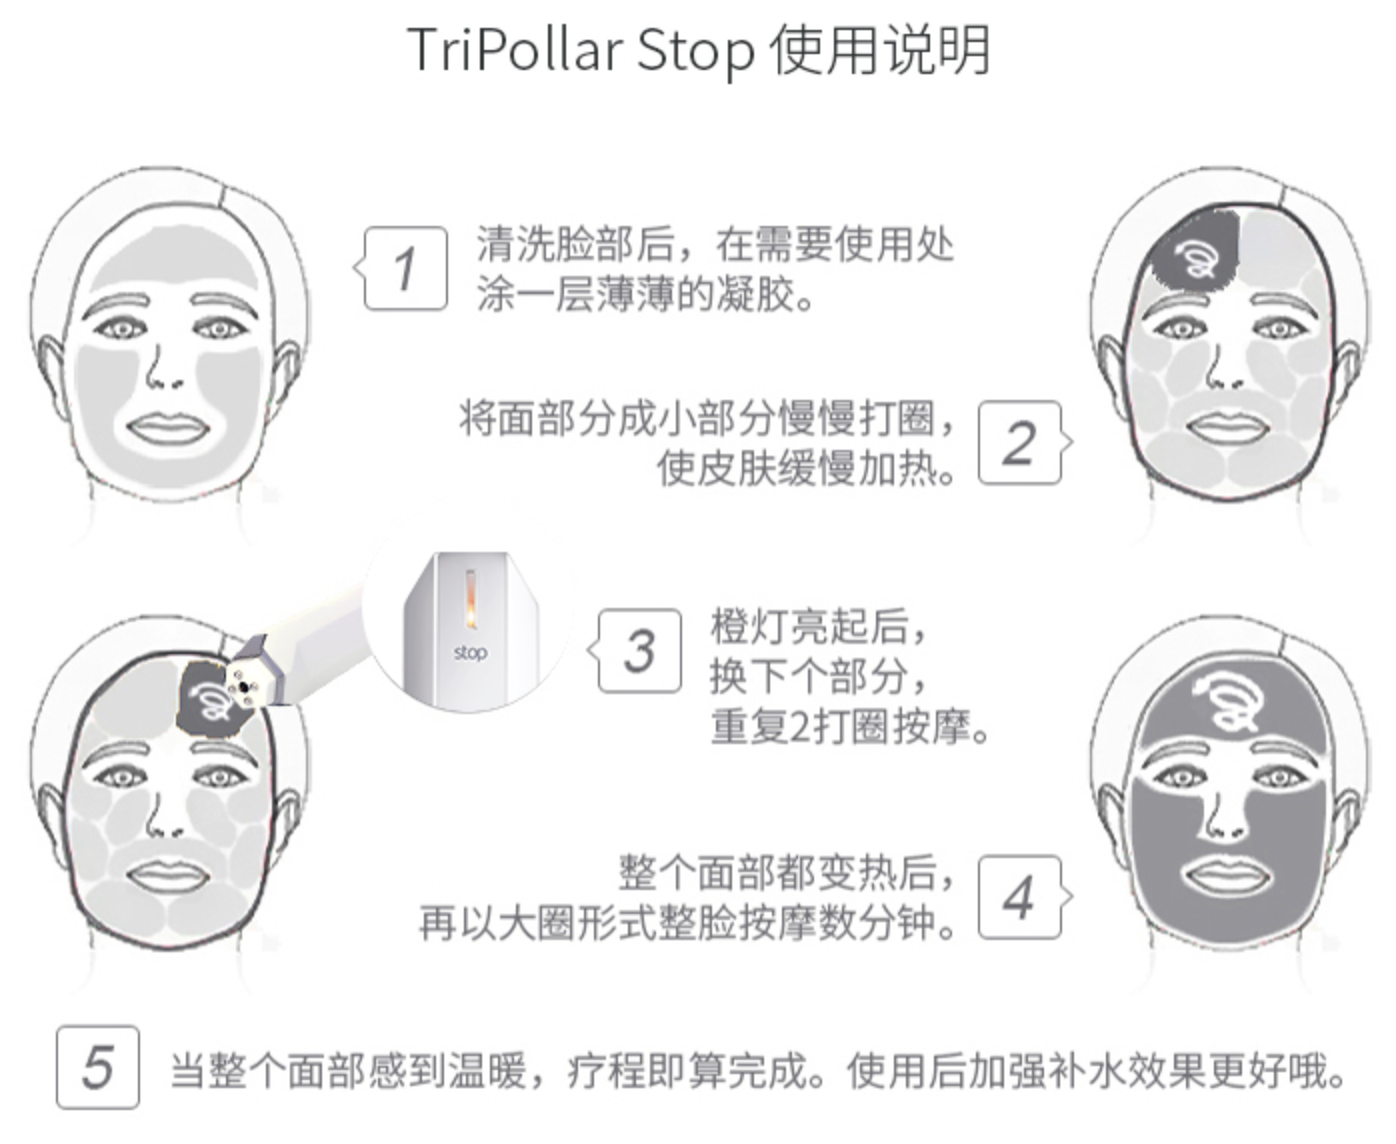 Tripollar童顏機好用嗎？Tripollar STOP v/ POSE /STOP X 以色列家用射頻電波拉皮美容儀評價與規格介紹